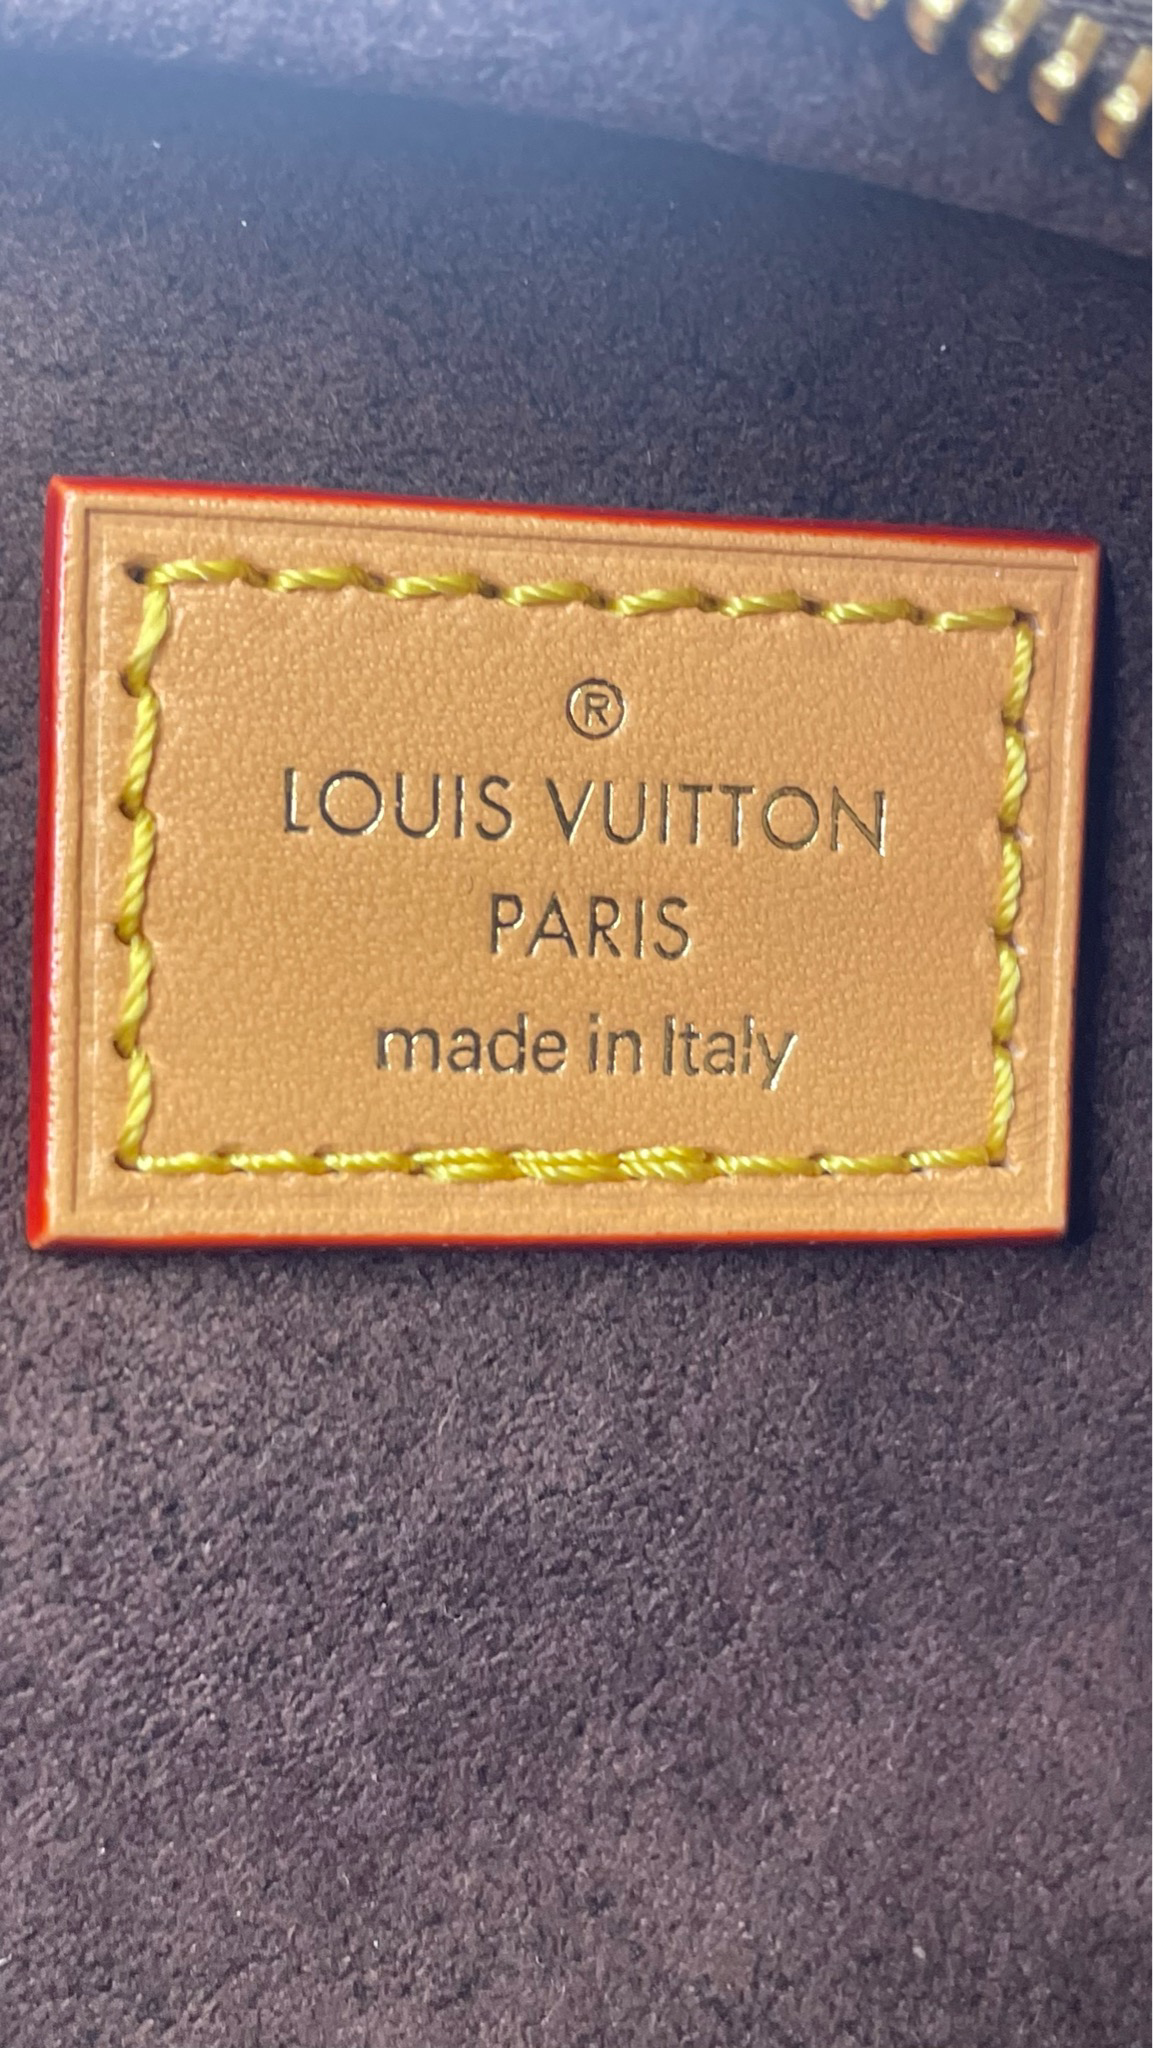 Pin by vale bocchi on Bags  Louis vuitton, Vuitton, Louis vuitton mini bag